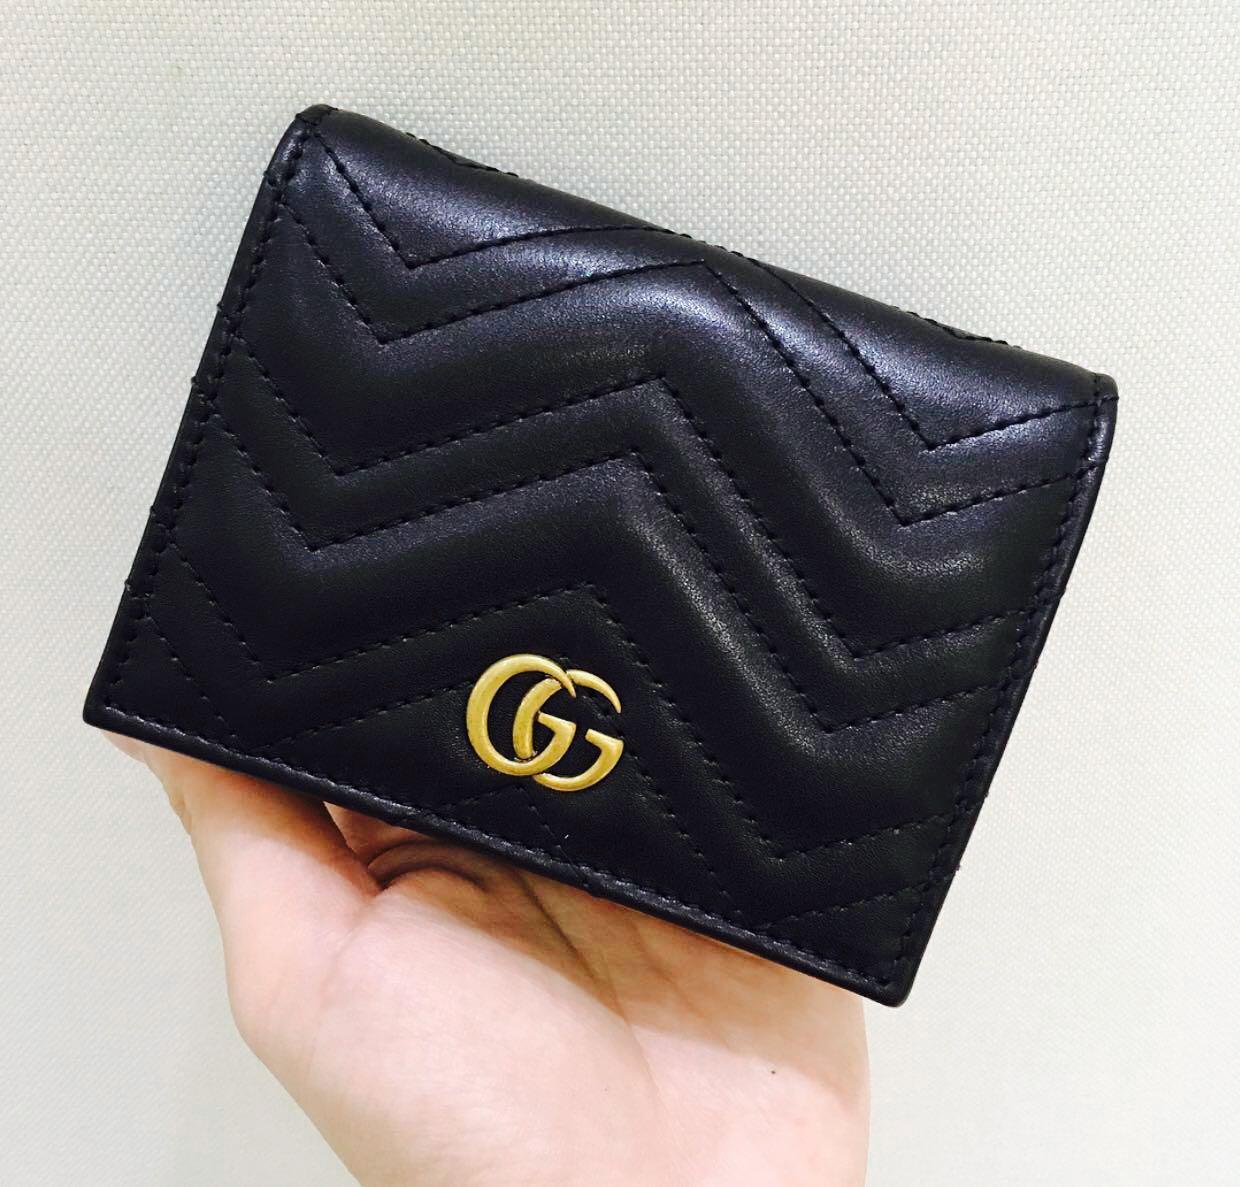 gucci small black wallet